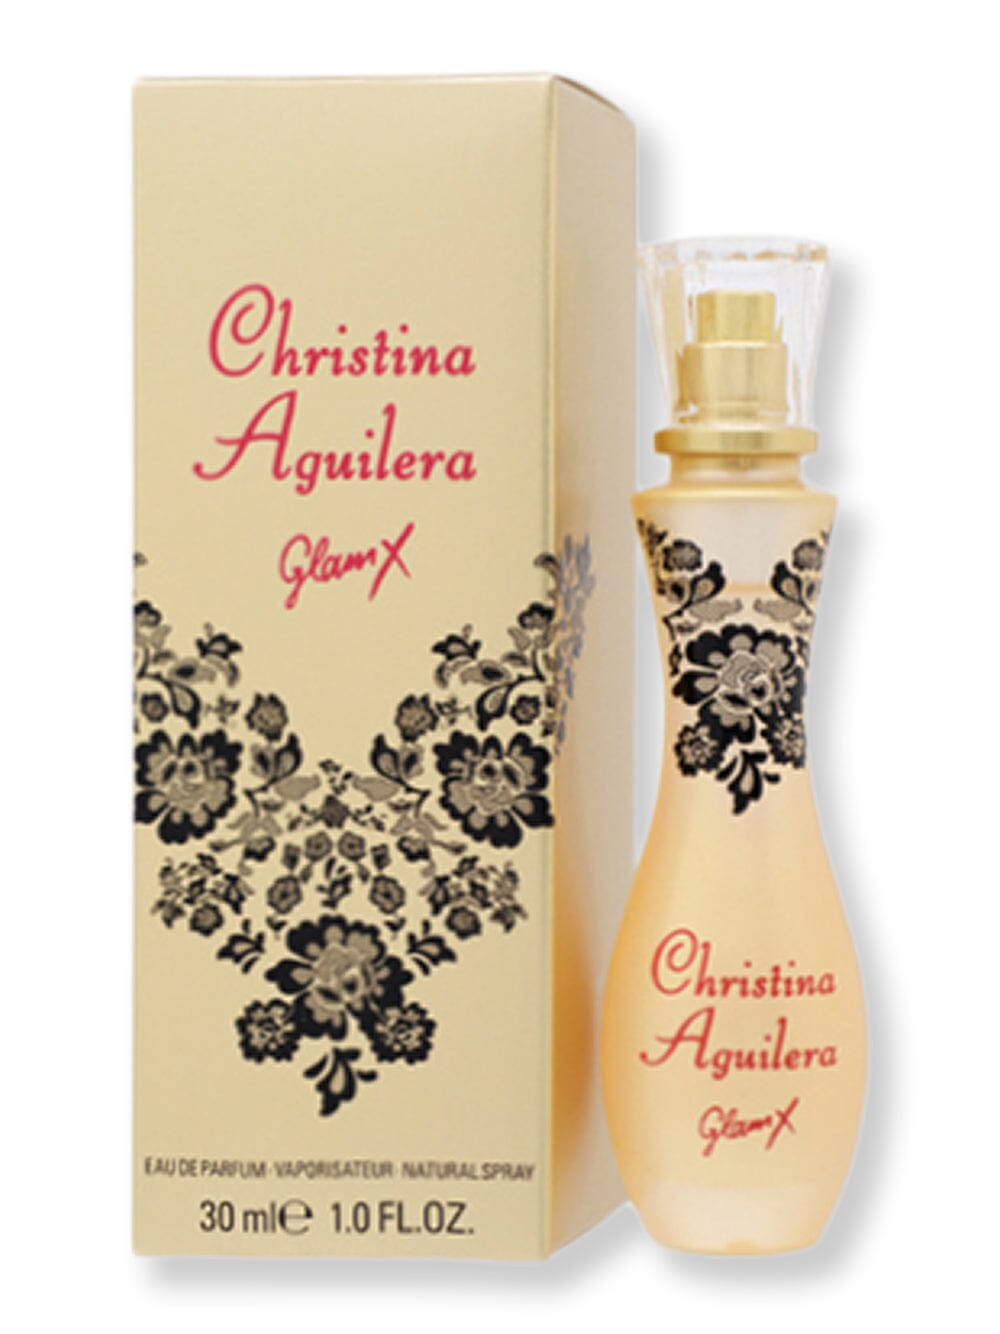 Christina Aguilera Christina Aguilera Glam X EDP Spray 1 oz30 ml Perfume 